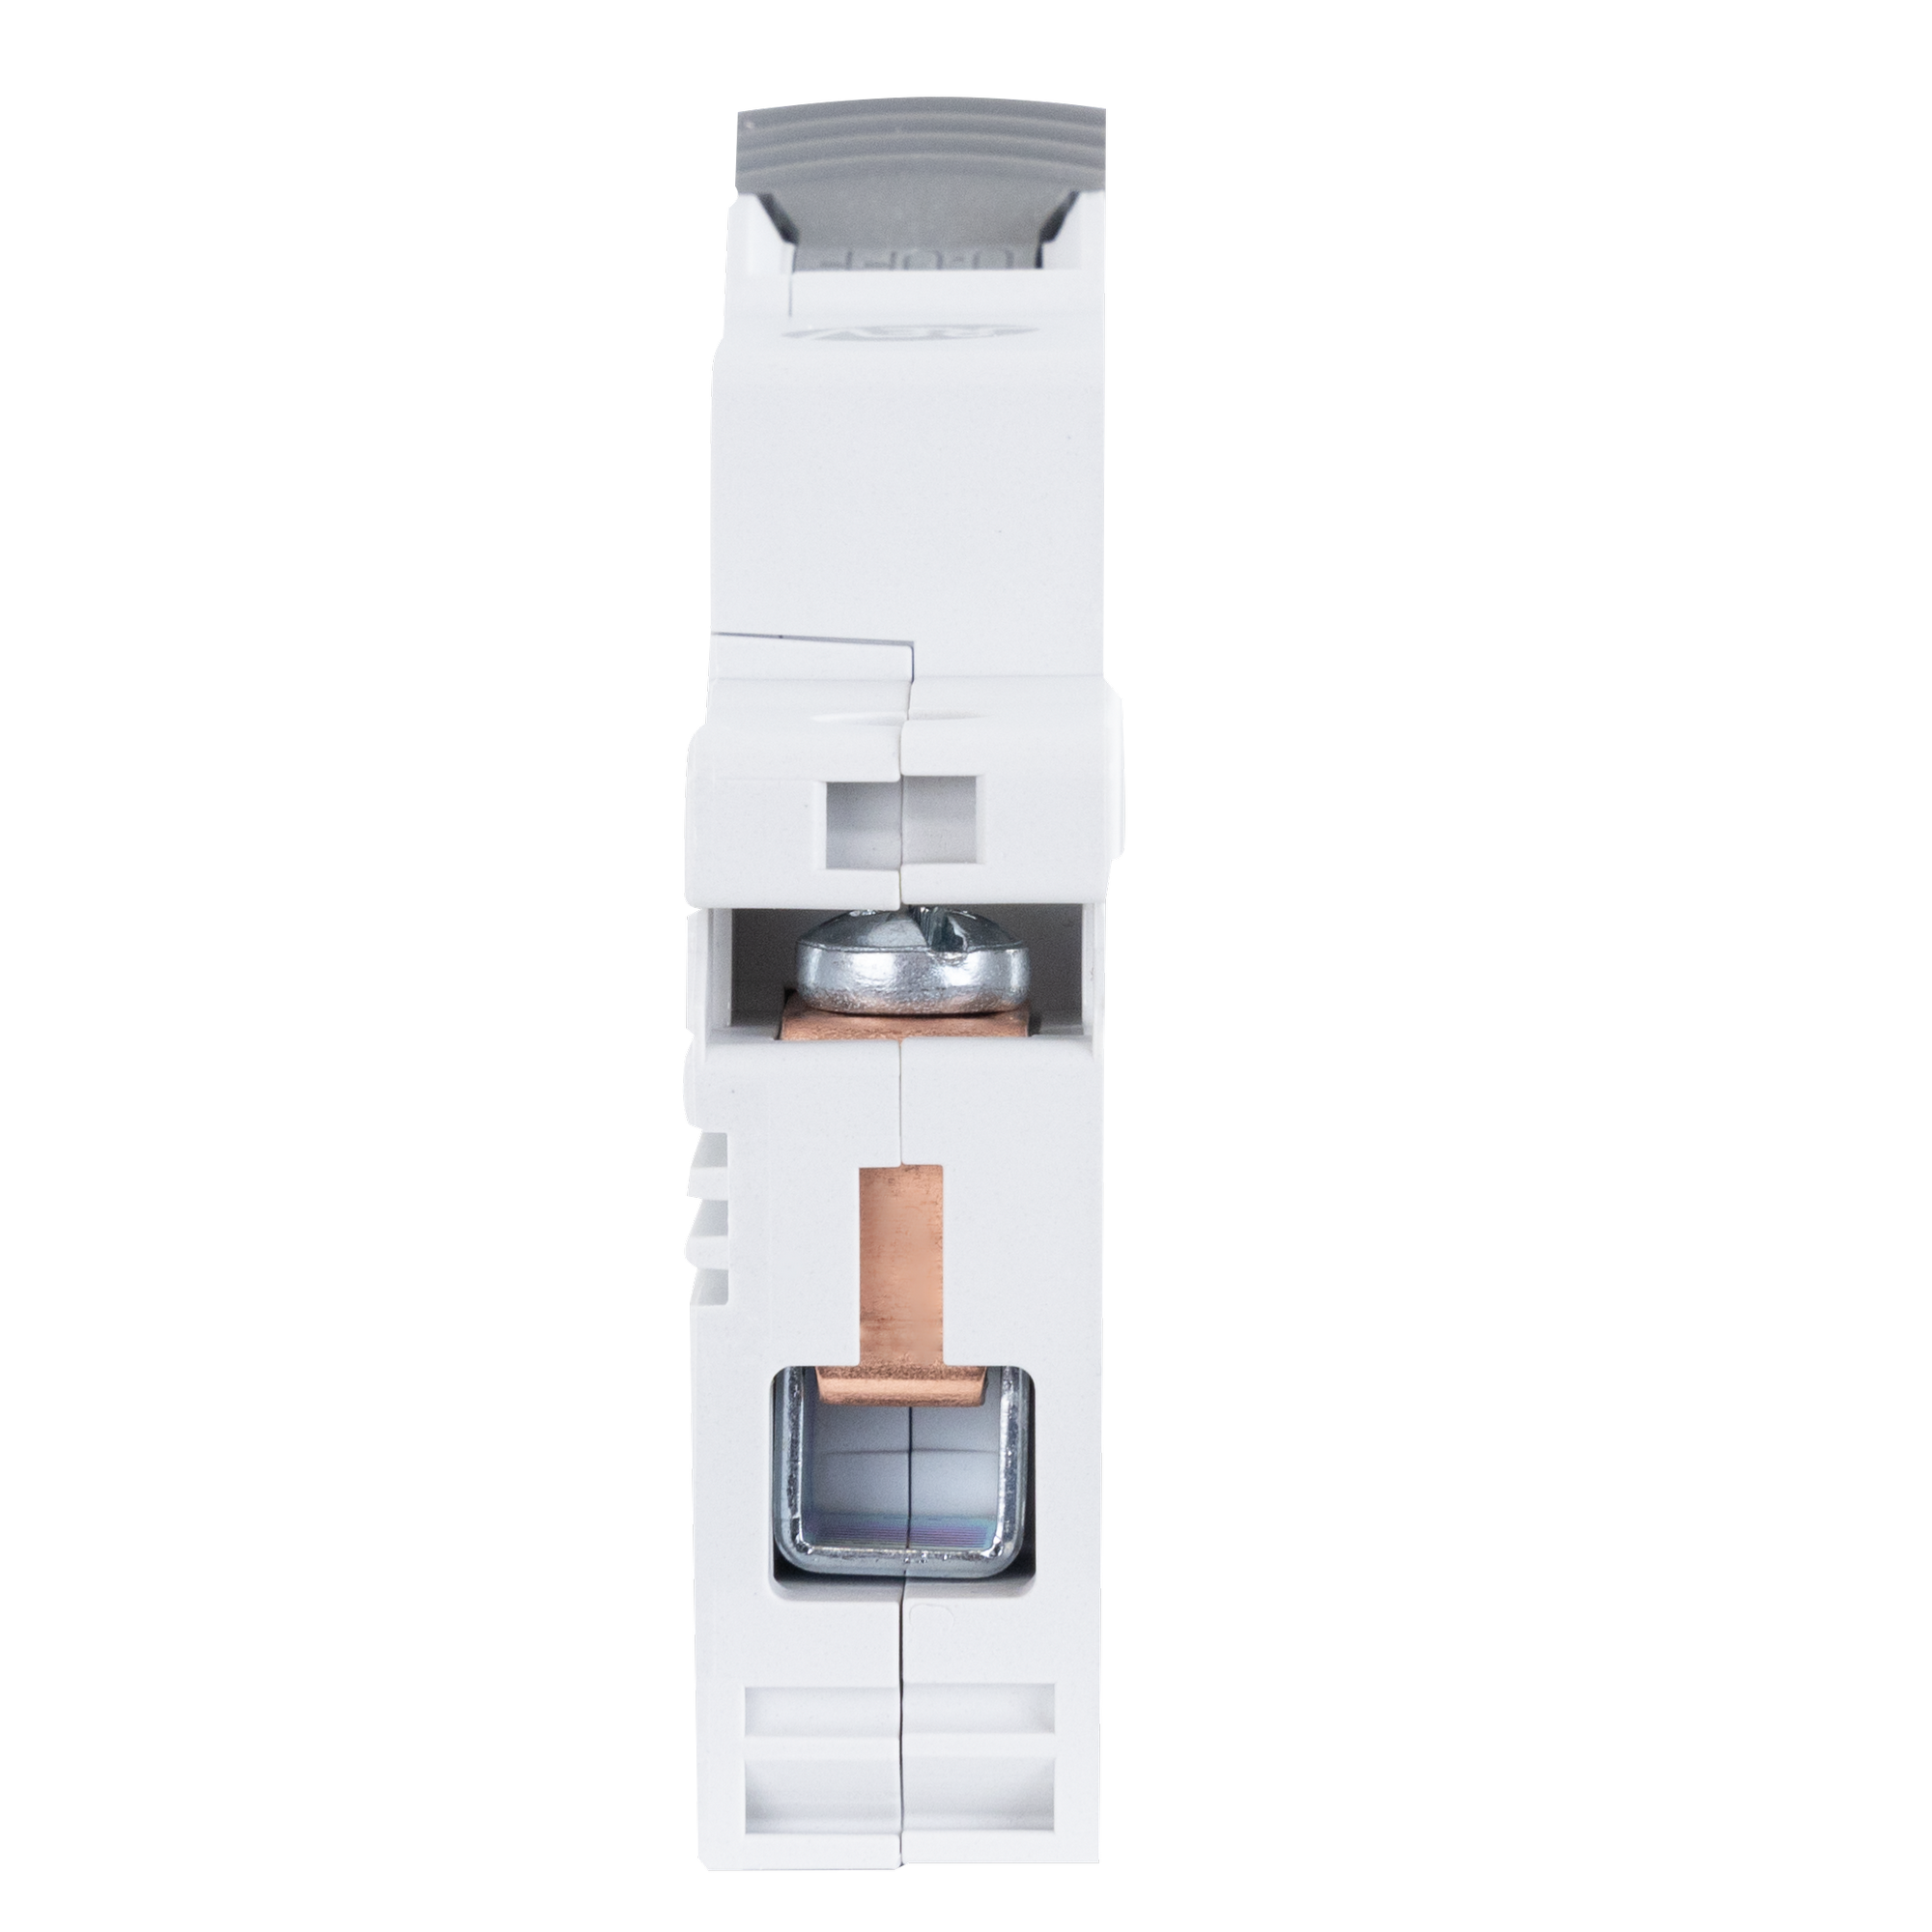 Einbauautomat 1-Polig grau 16 A 500 V + product picture